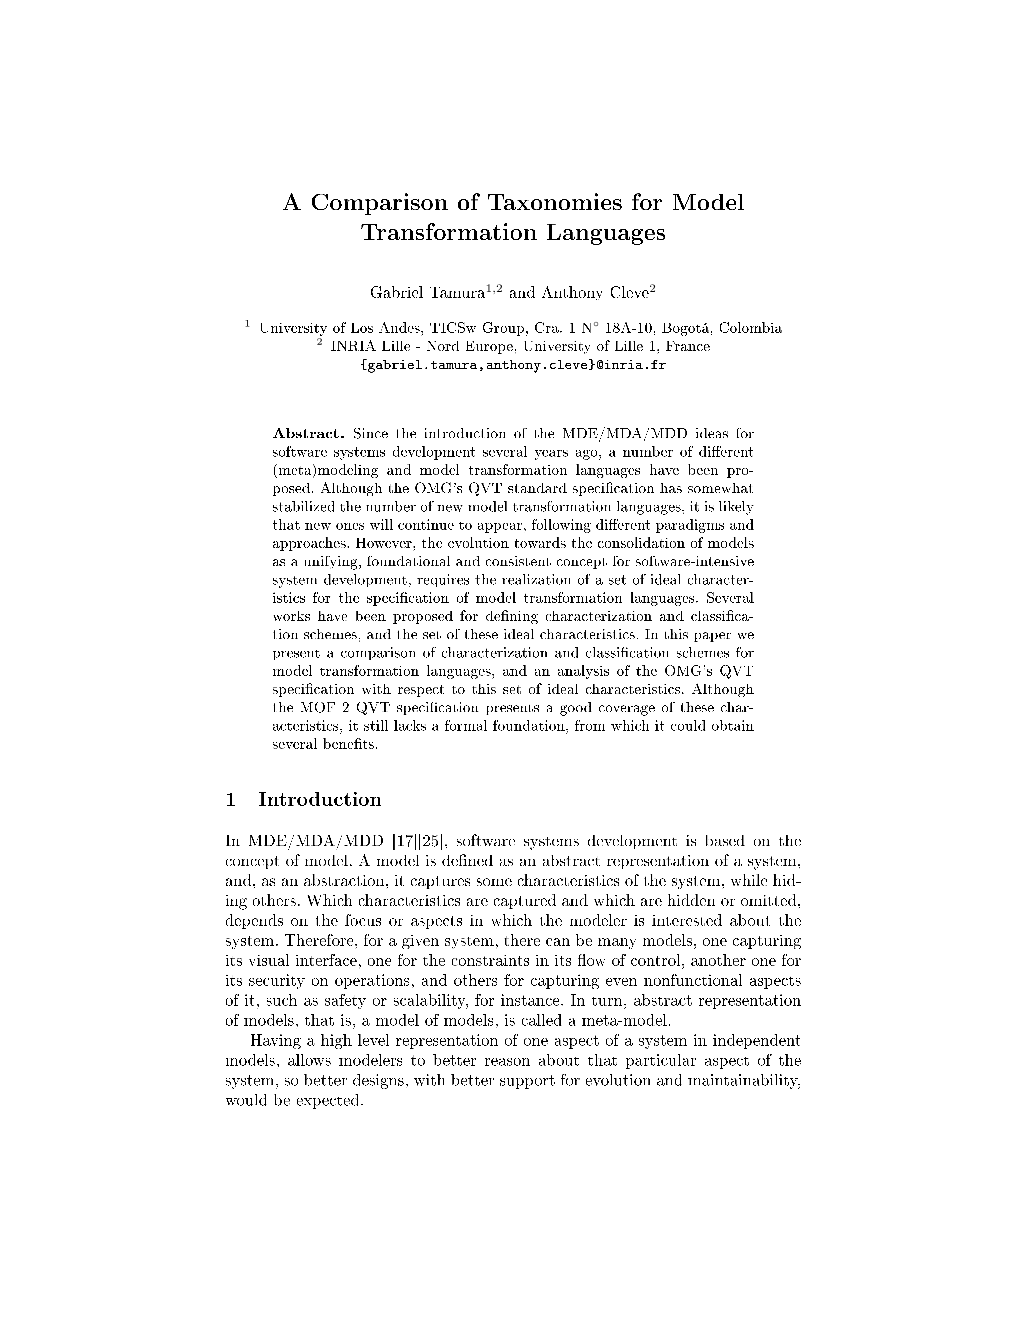 A Comparison of Taxonomies for Model Transformation Languages